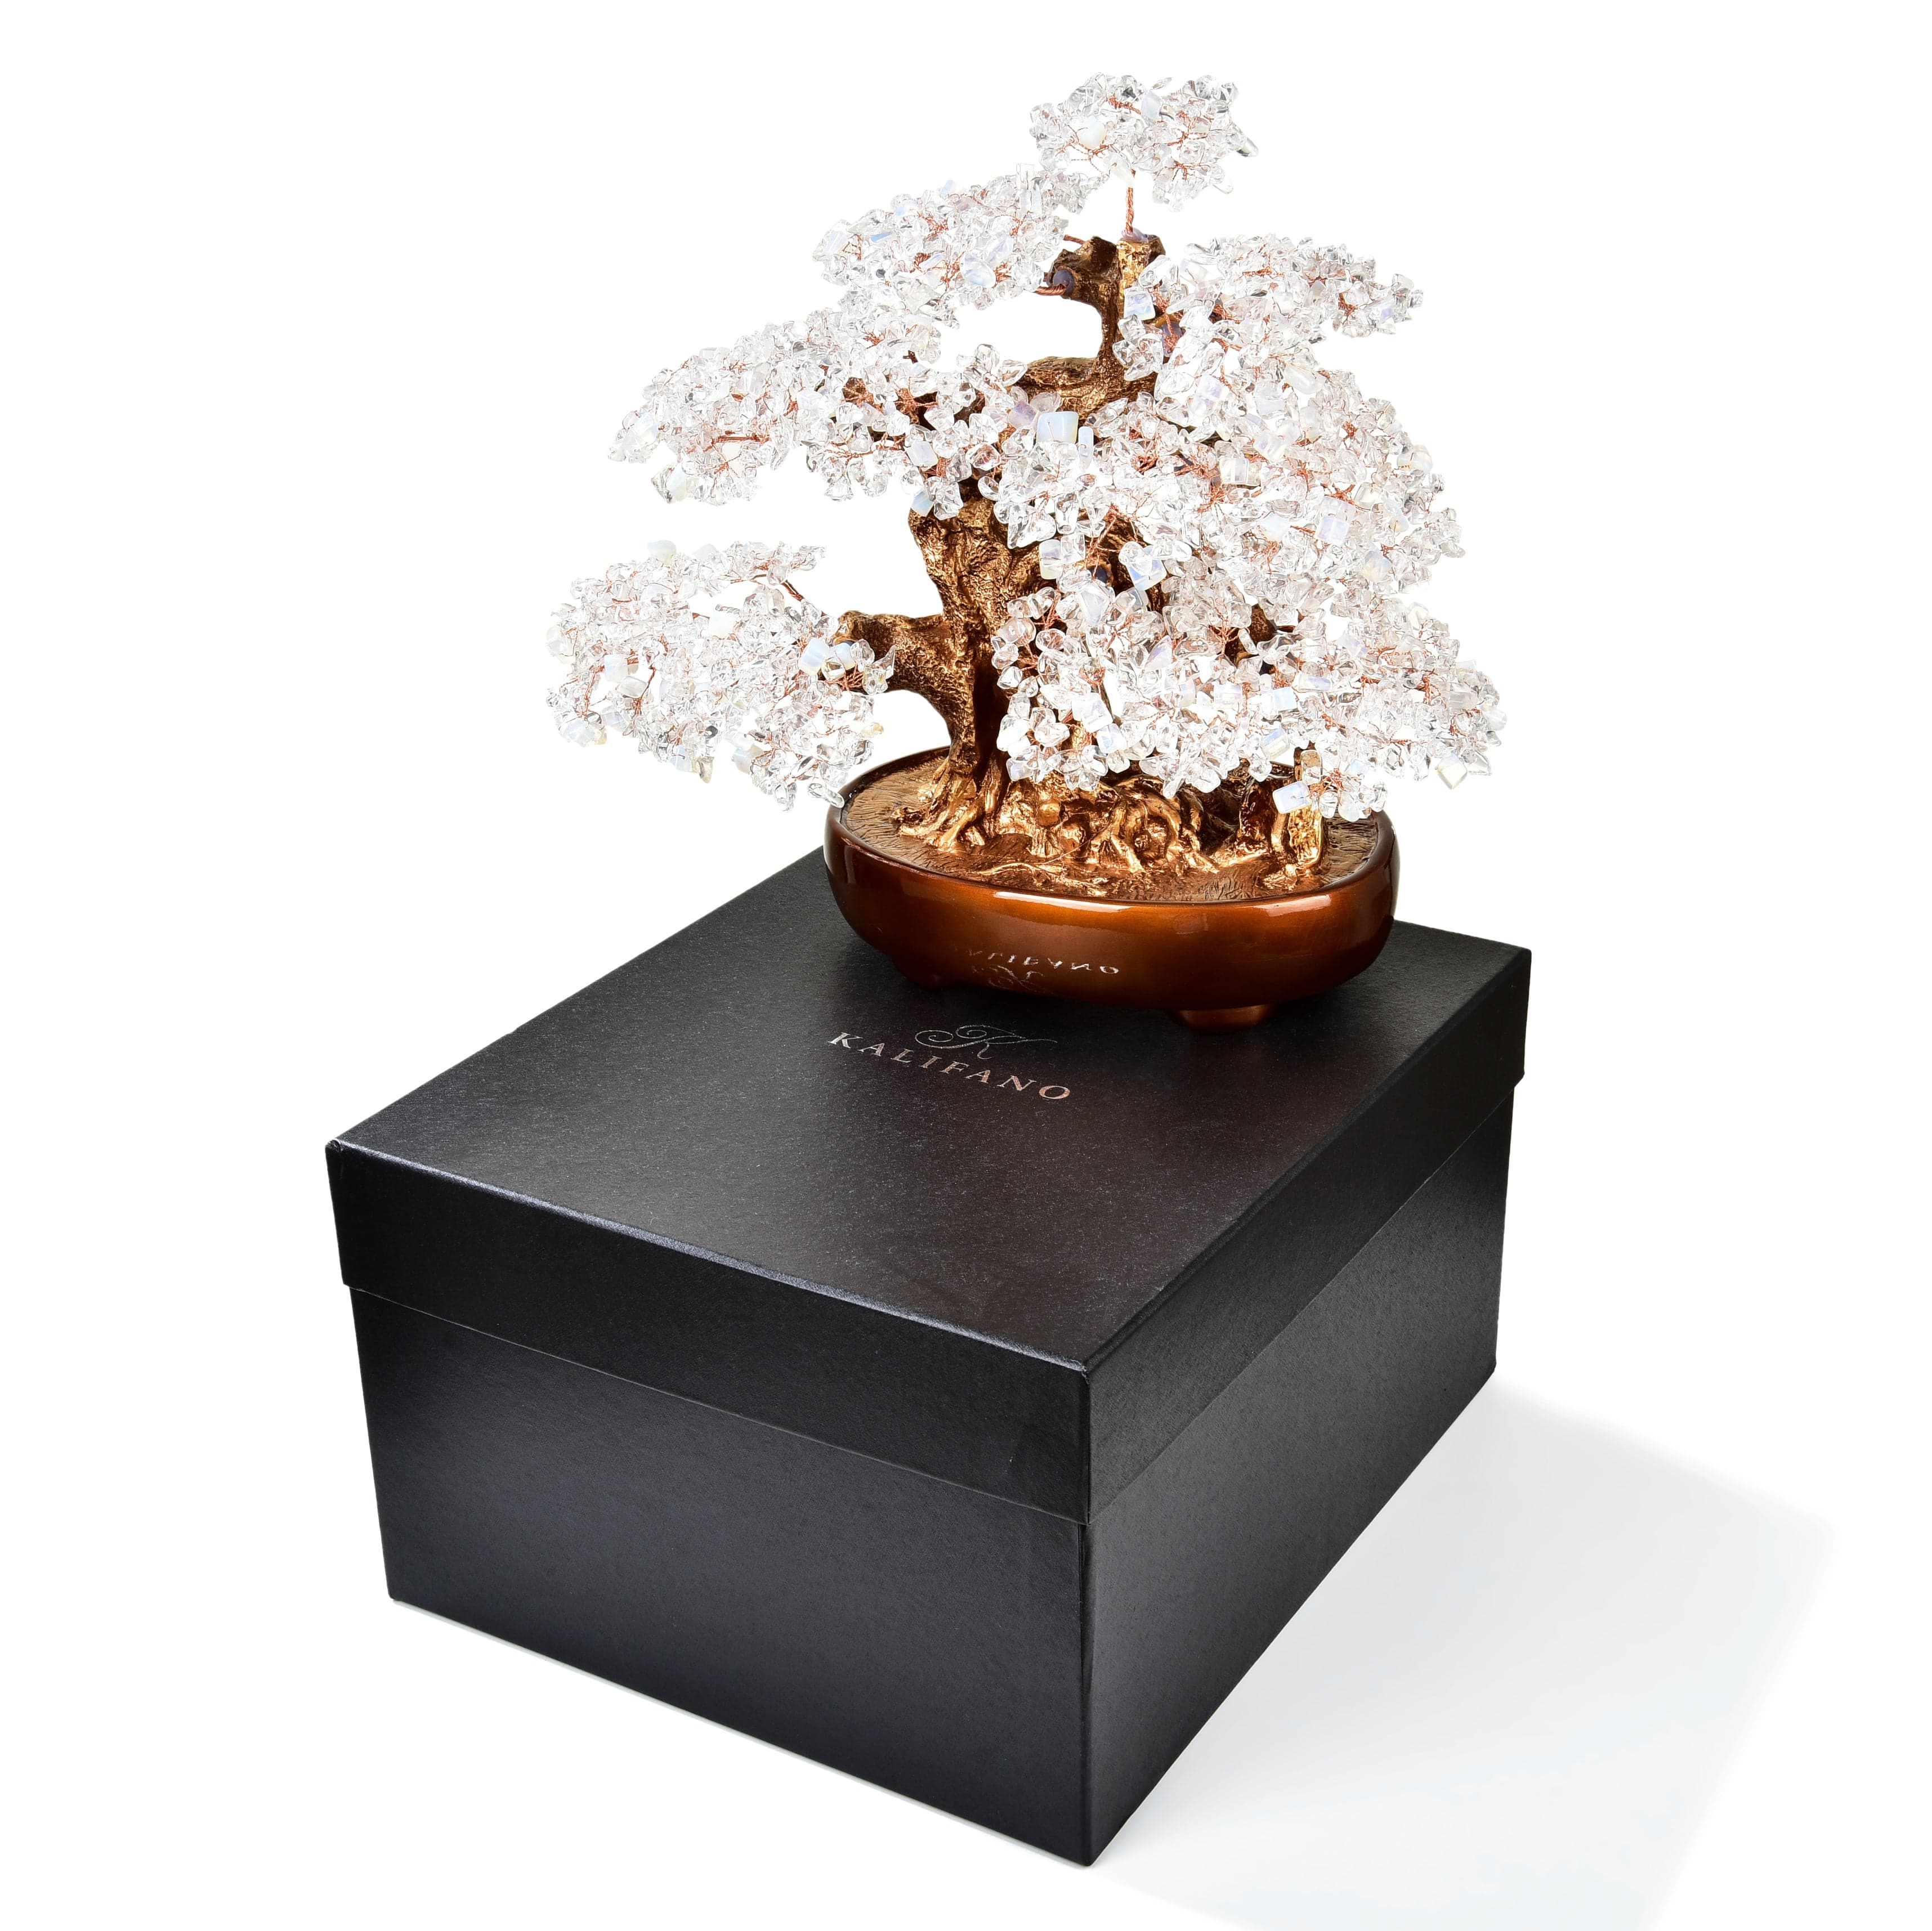 Kalifano Gemstone Trees Opalite Moonstone & Quartz Bonsai Tree of Life with 1,251 Natural Gemstones K9150N-MS